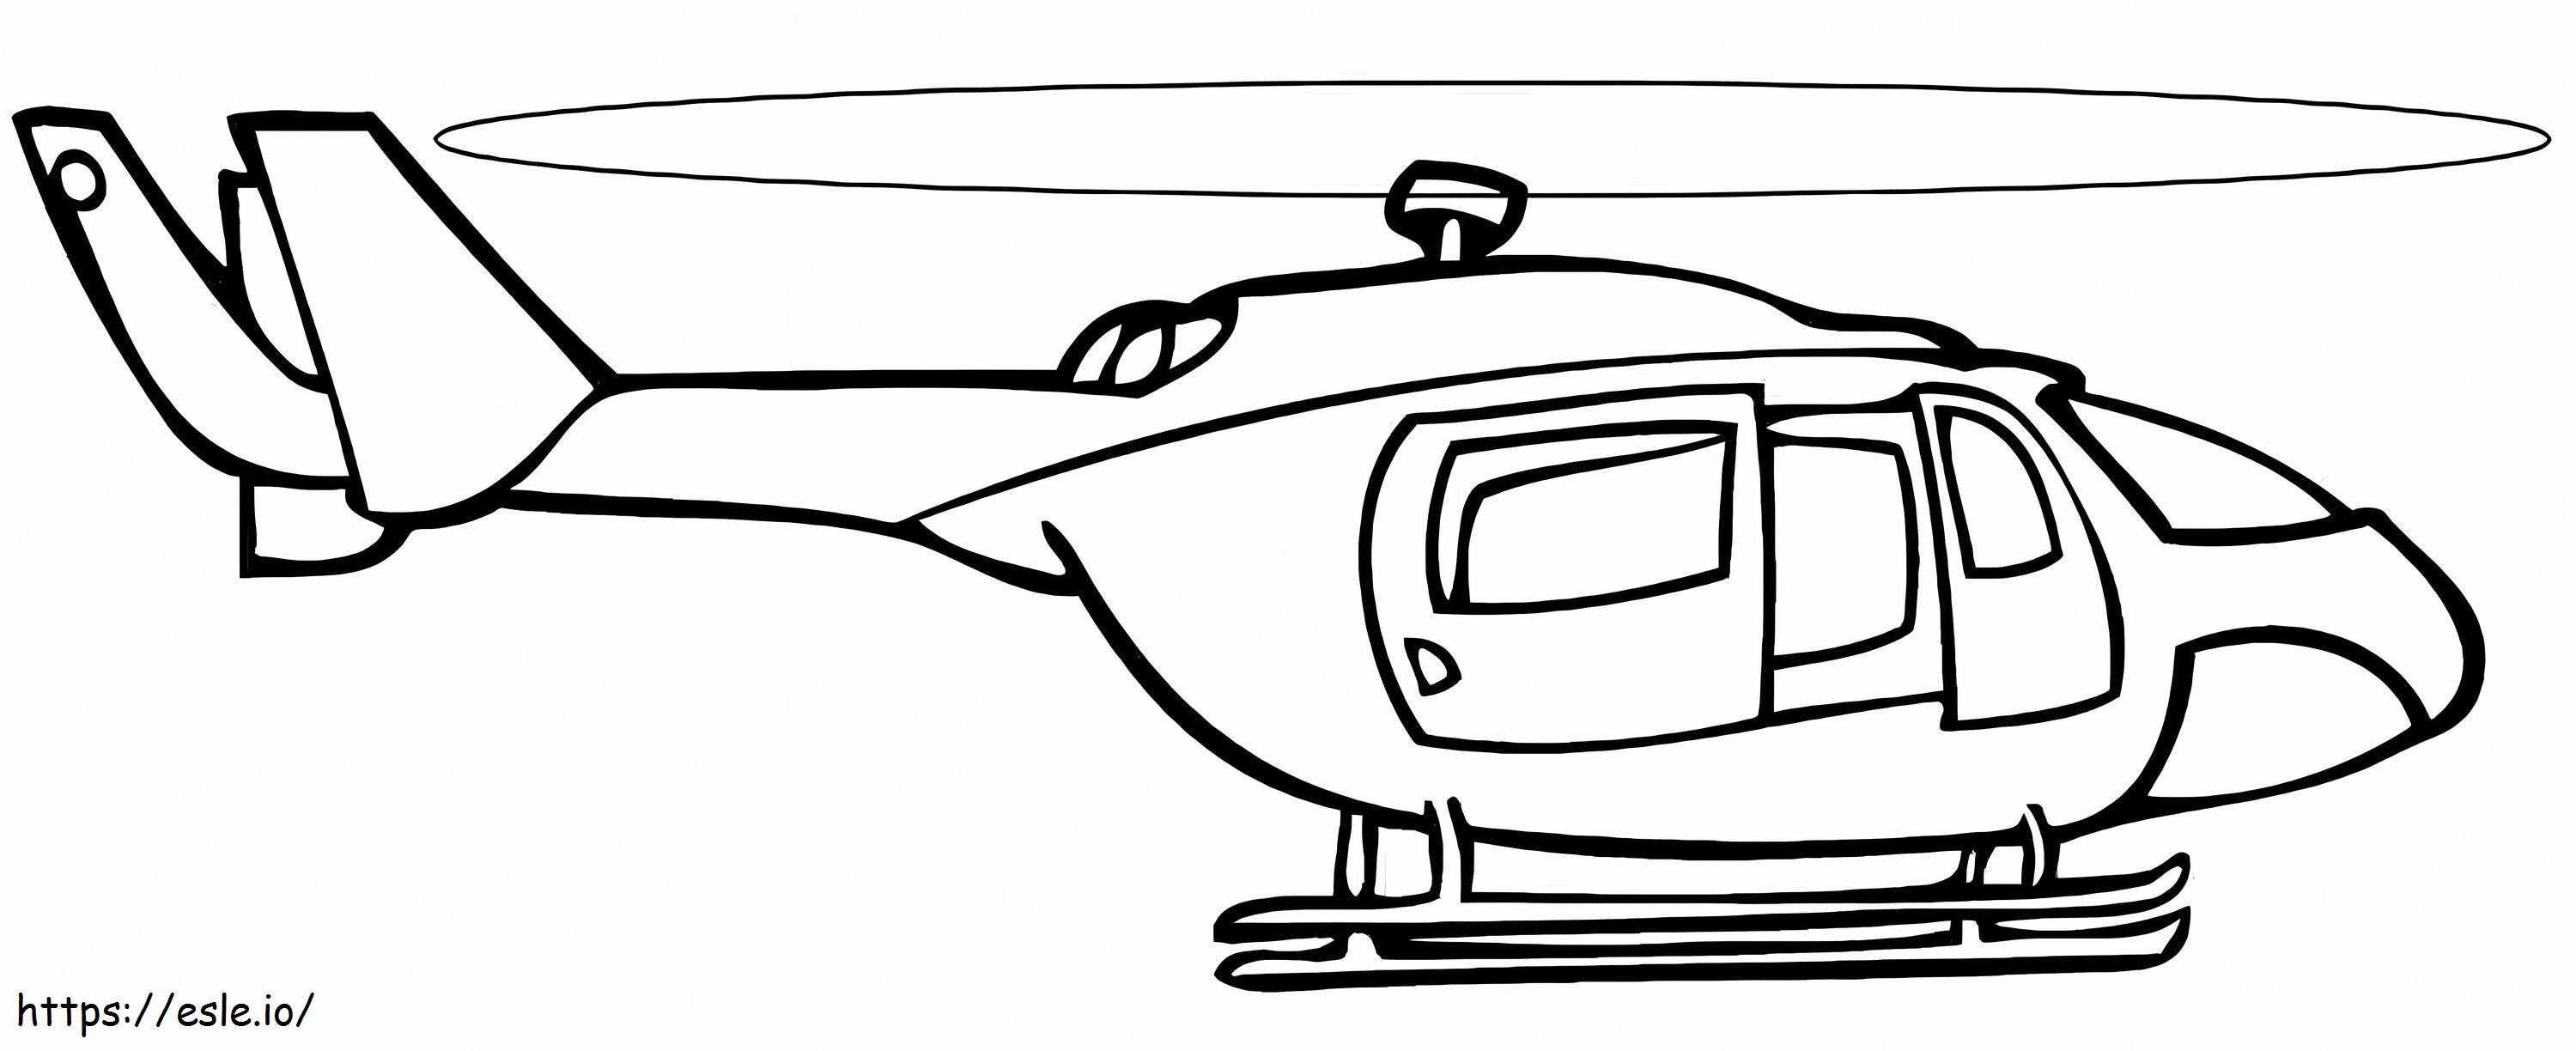 Perfekter Hubschrauber ausmalbilder